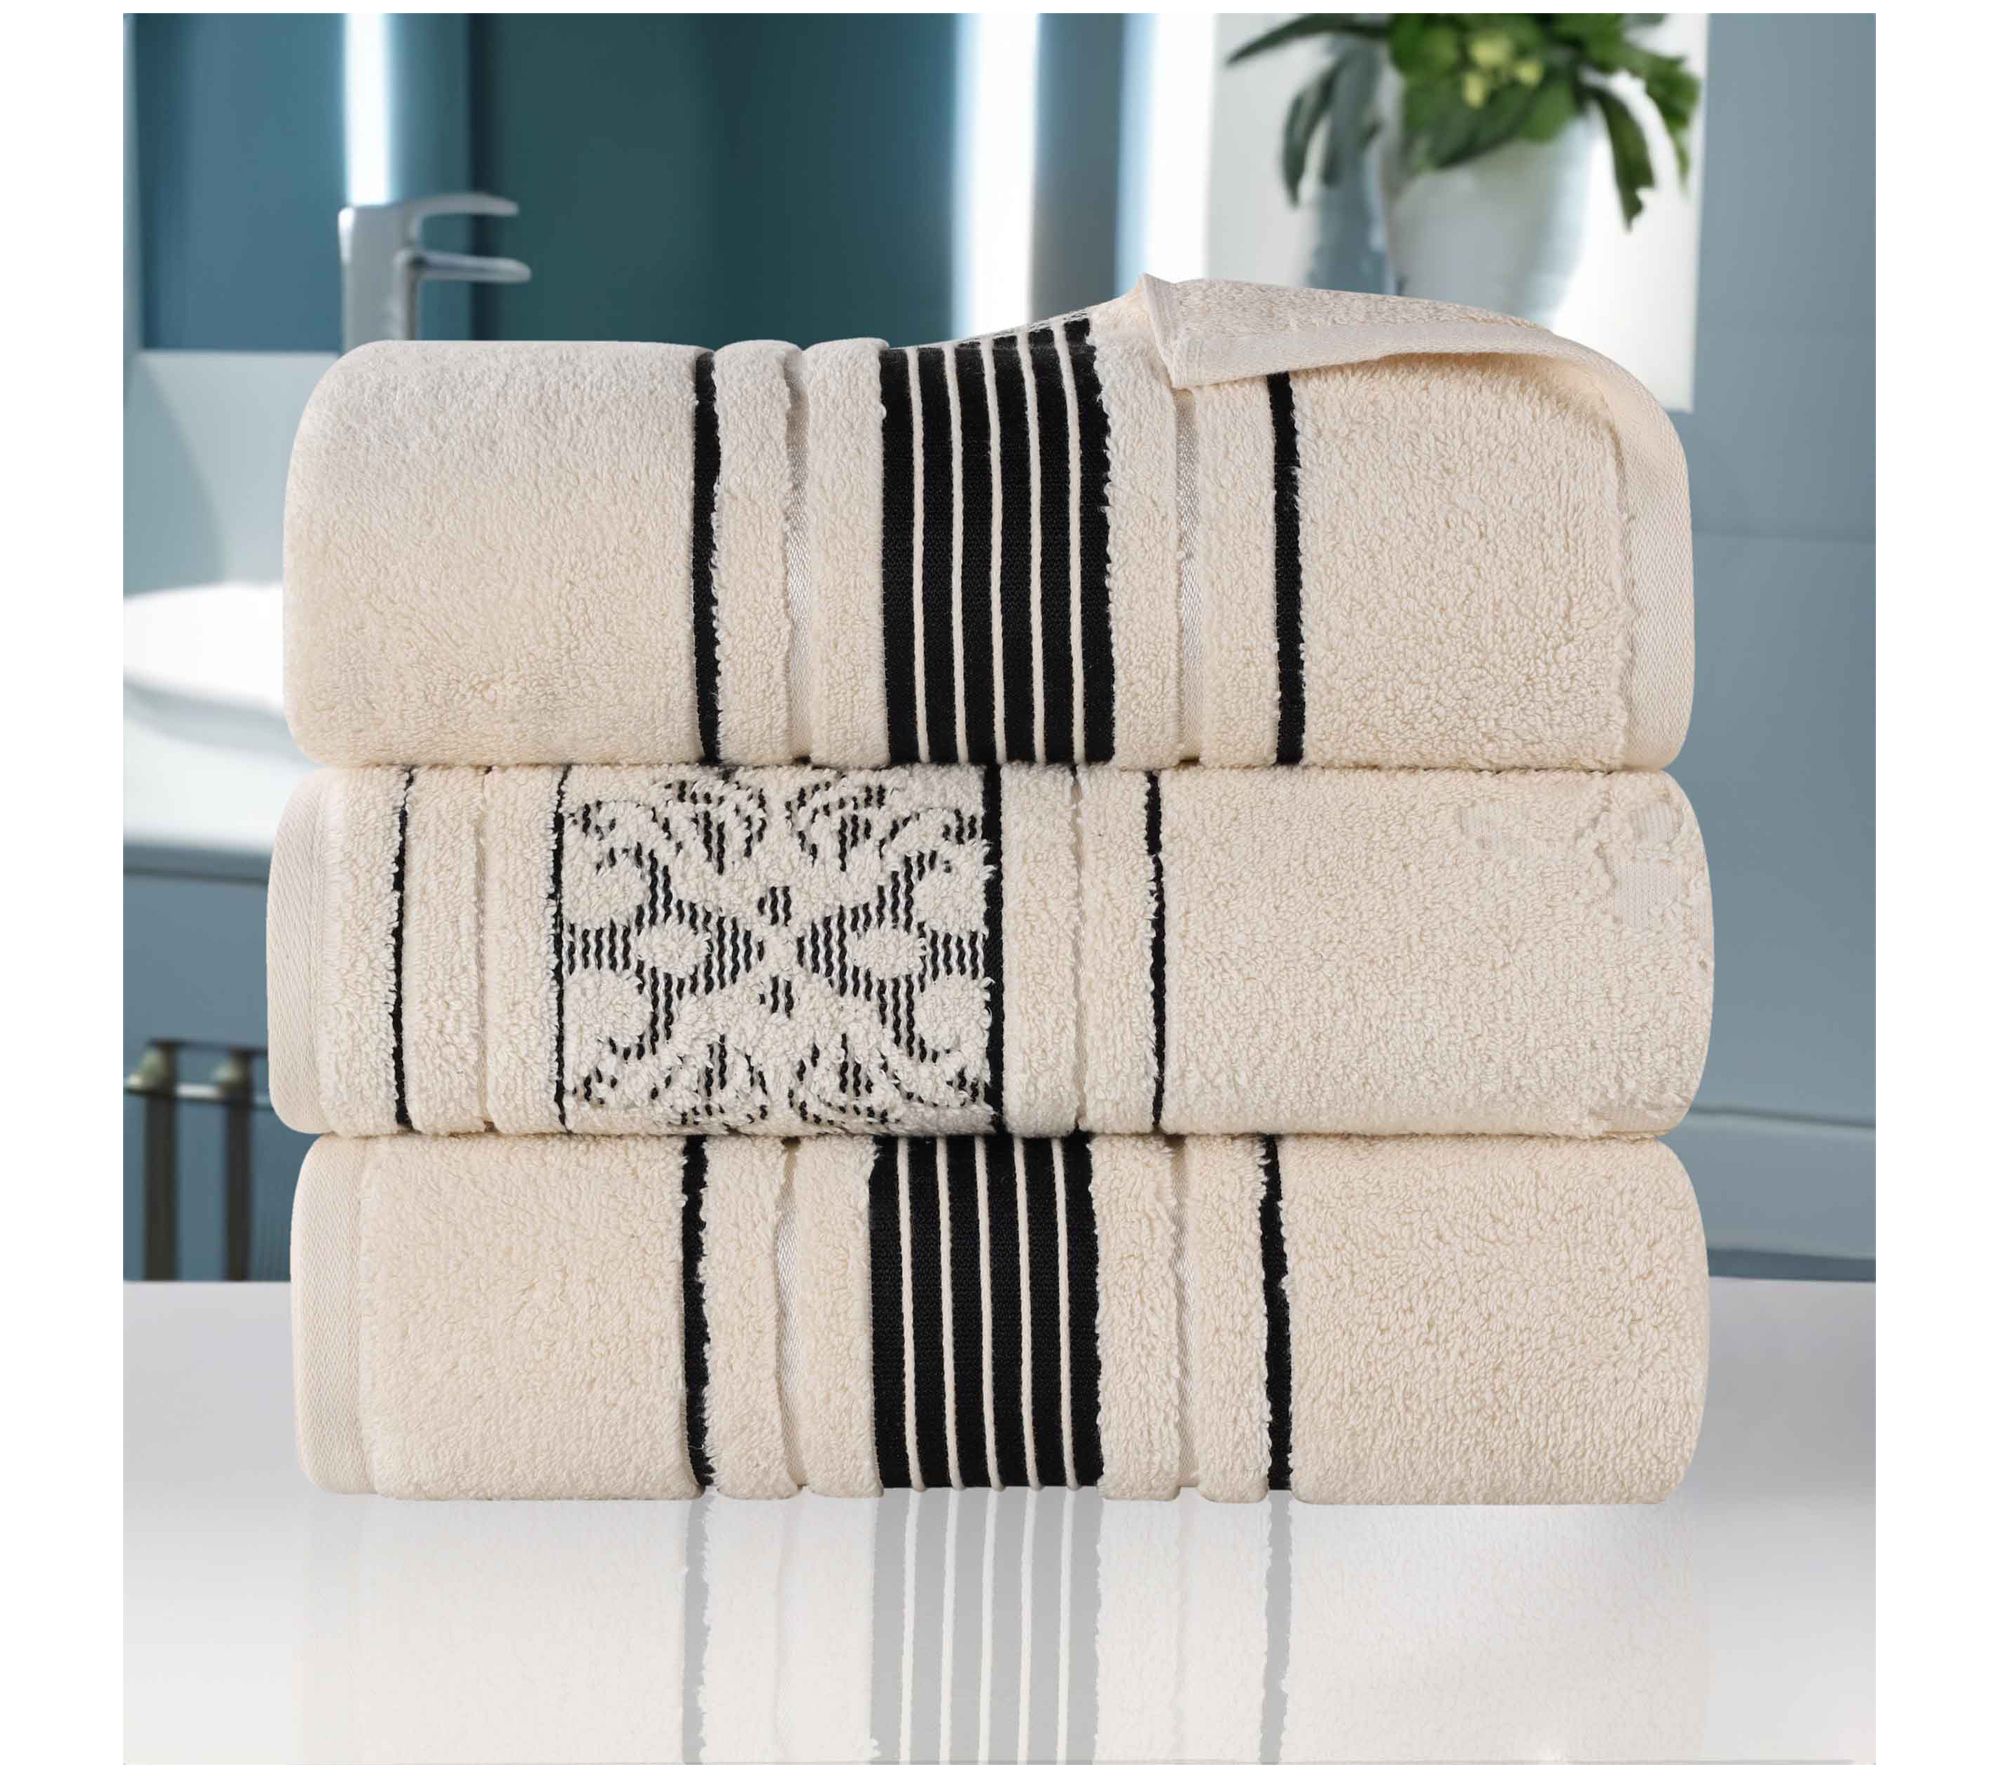 Superior 3pc Soft Zero Twist Cotton Ribbed Plush Towel Set 